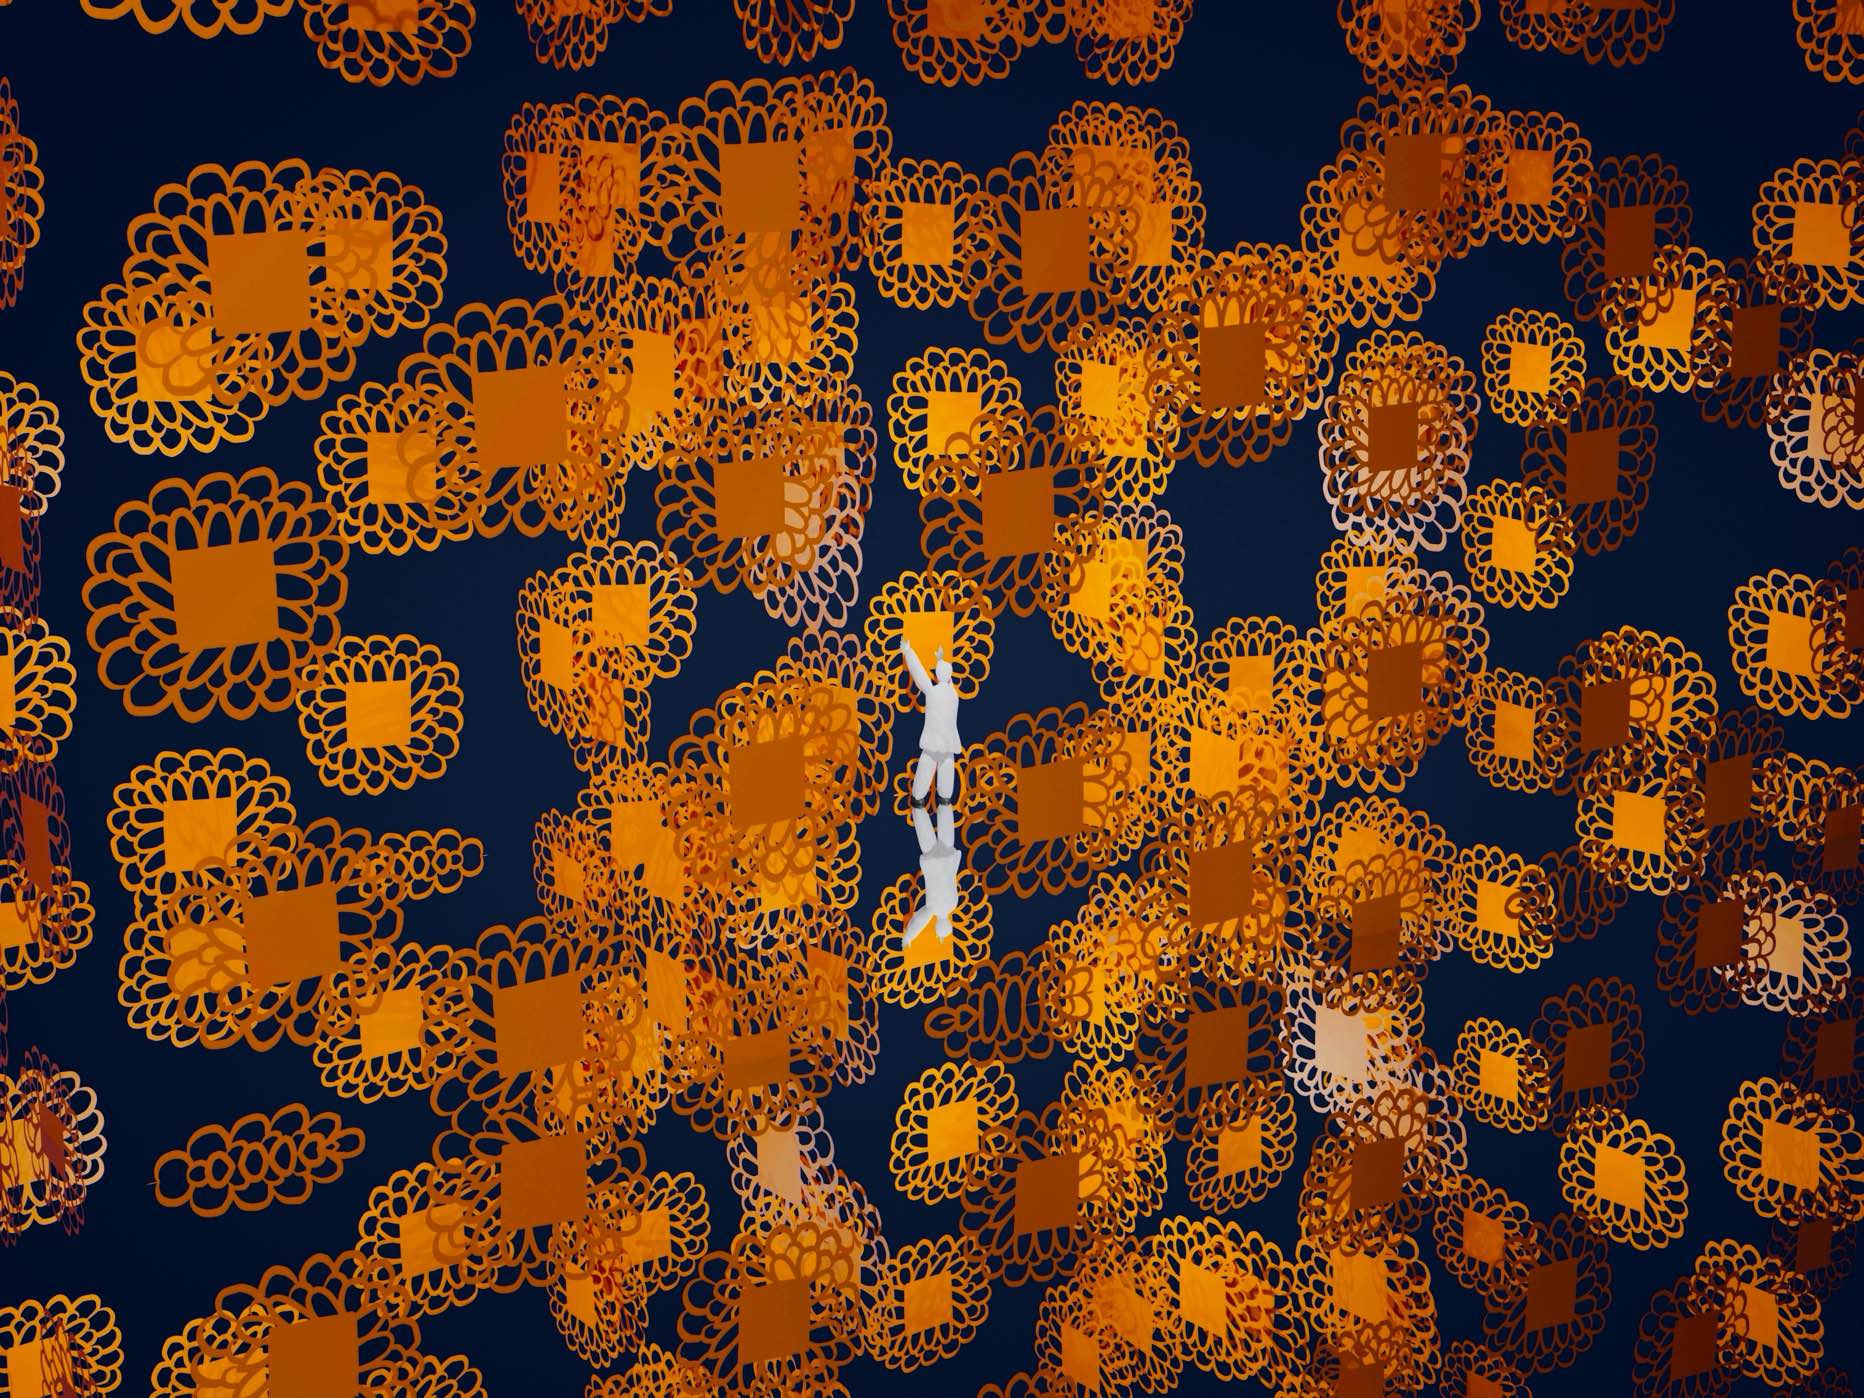 Atsushigraph Graphic Arts Flower Pixel